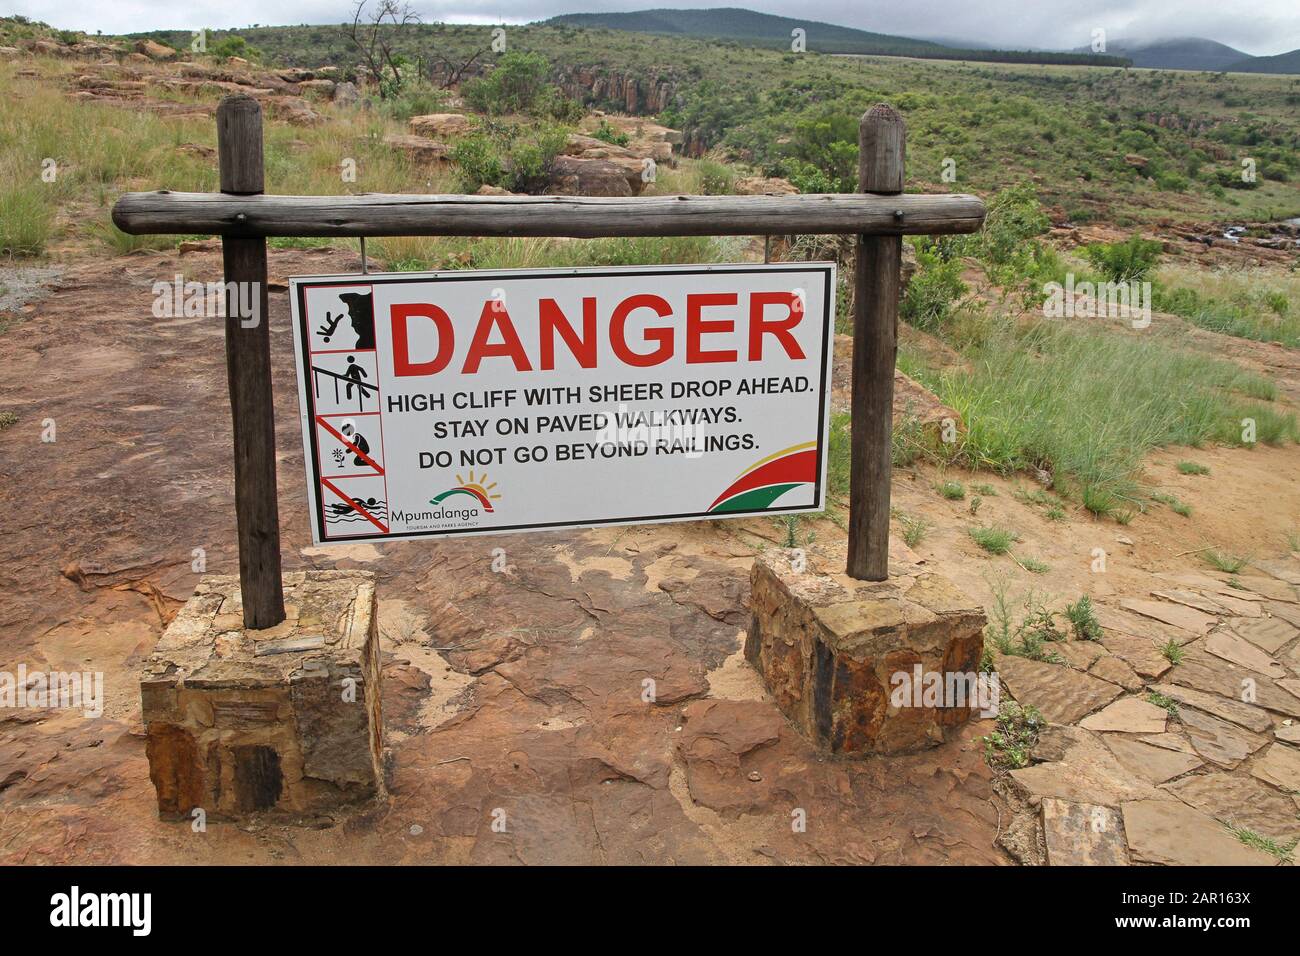 Danger Warning sign high cliff with sheer drop ahead, Burke's Luck Potholes, Graskop Blyde River Lodge, Moremela, Mpumalanga, South Africa. Stock Photo